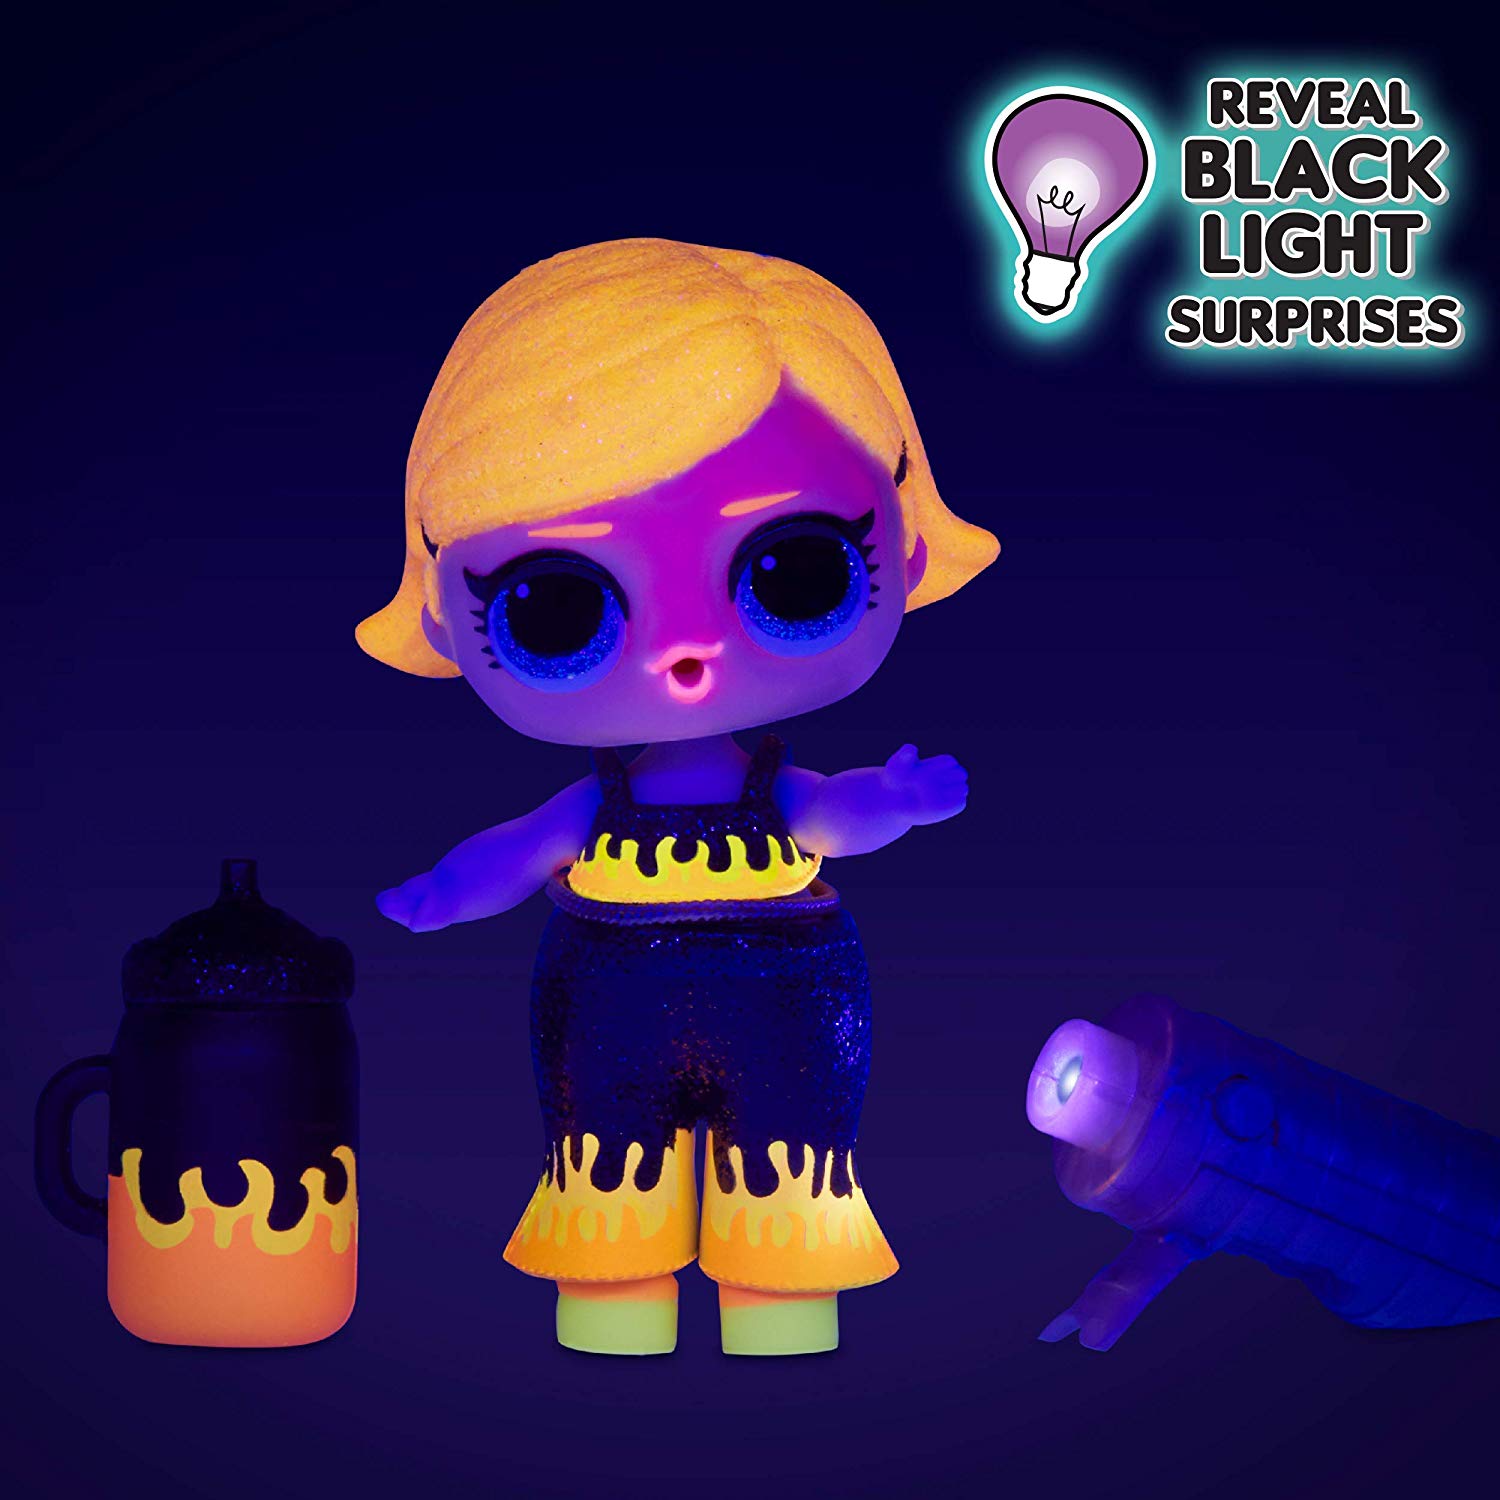 L.O.L. Surprise! Lights Glitter Doll reveal black light surprises. Release date